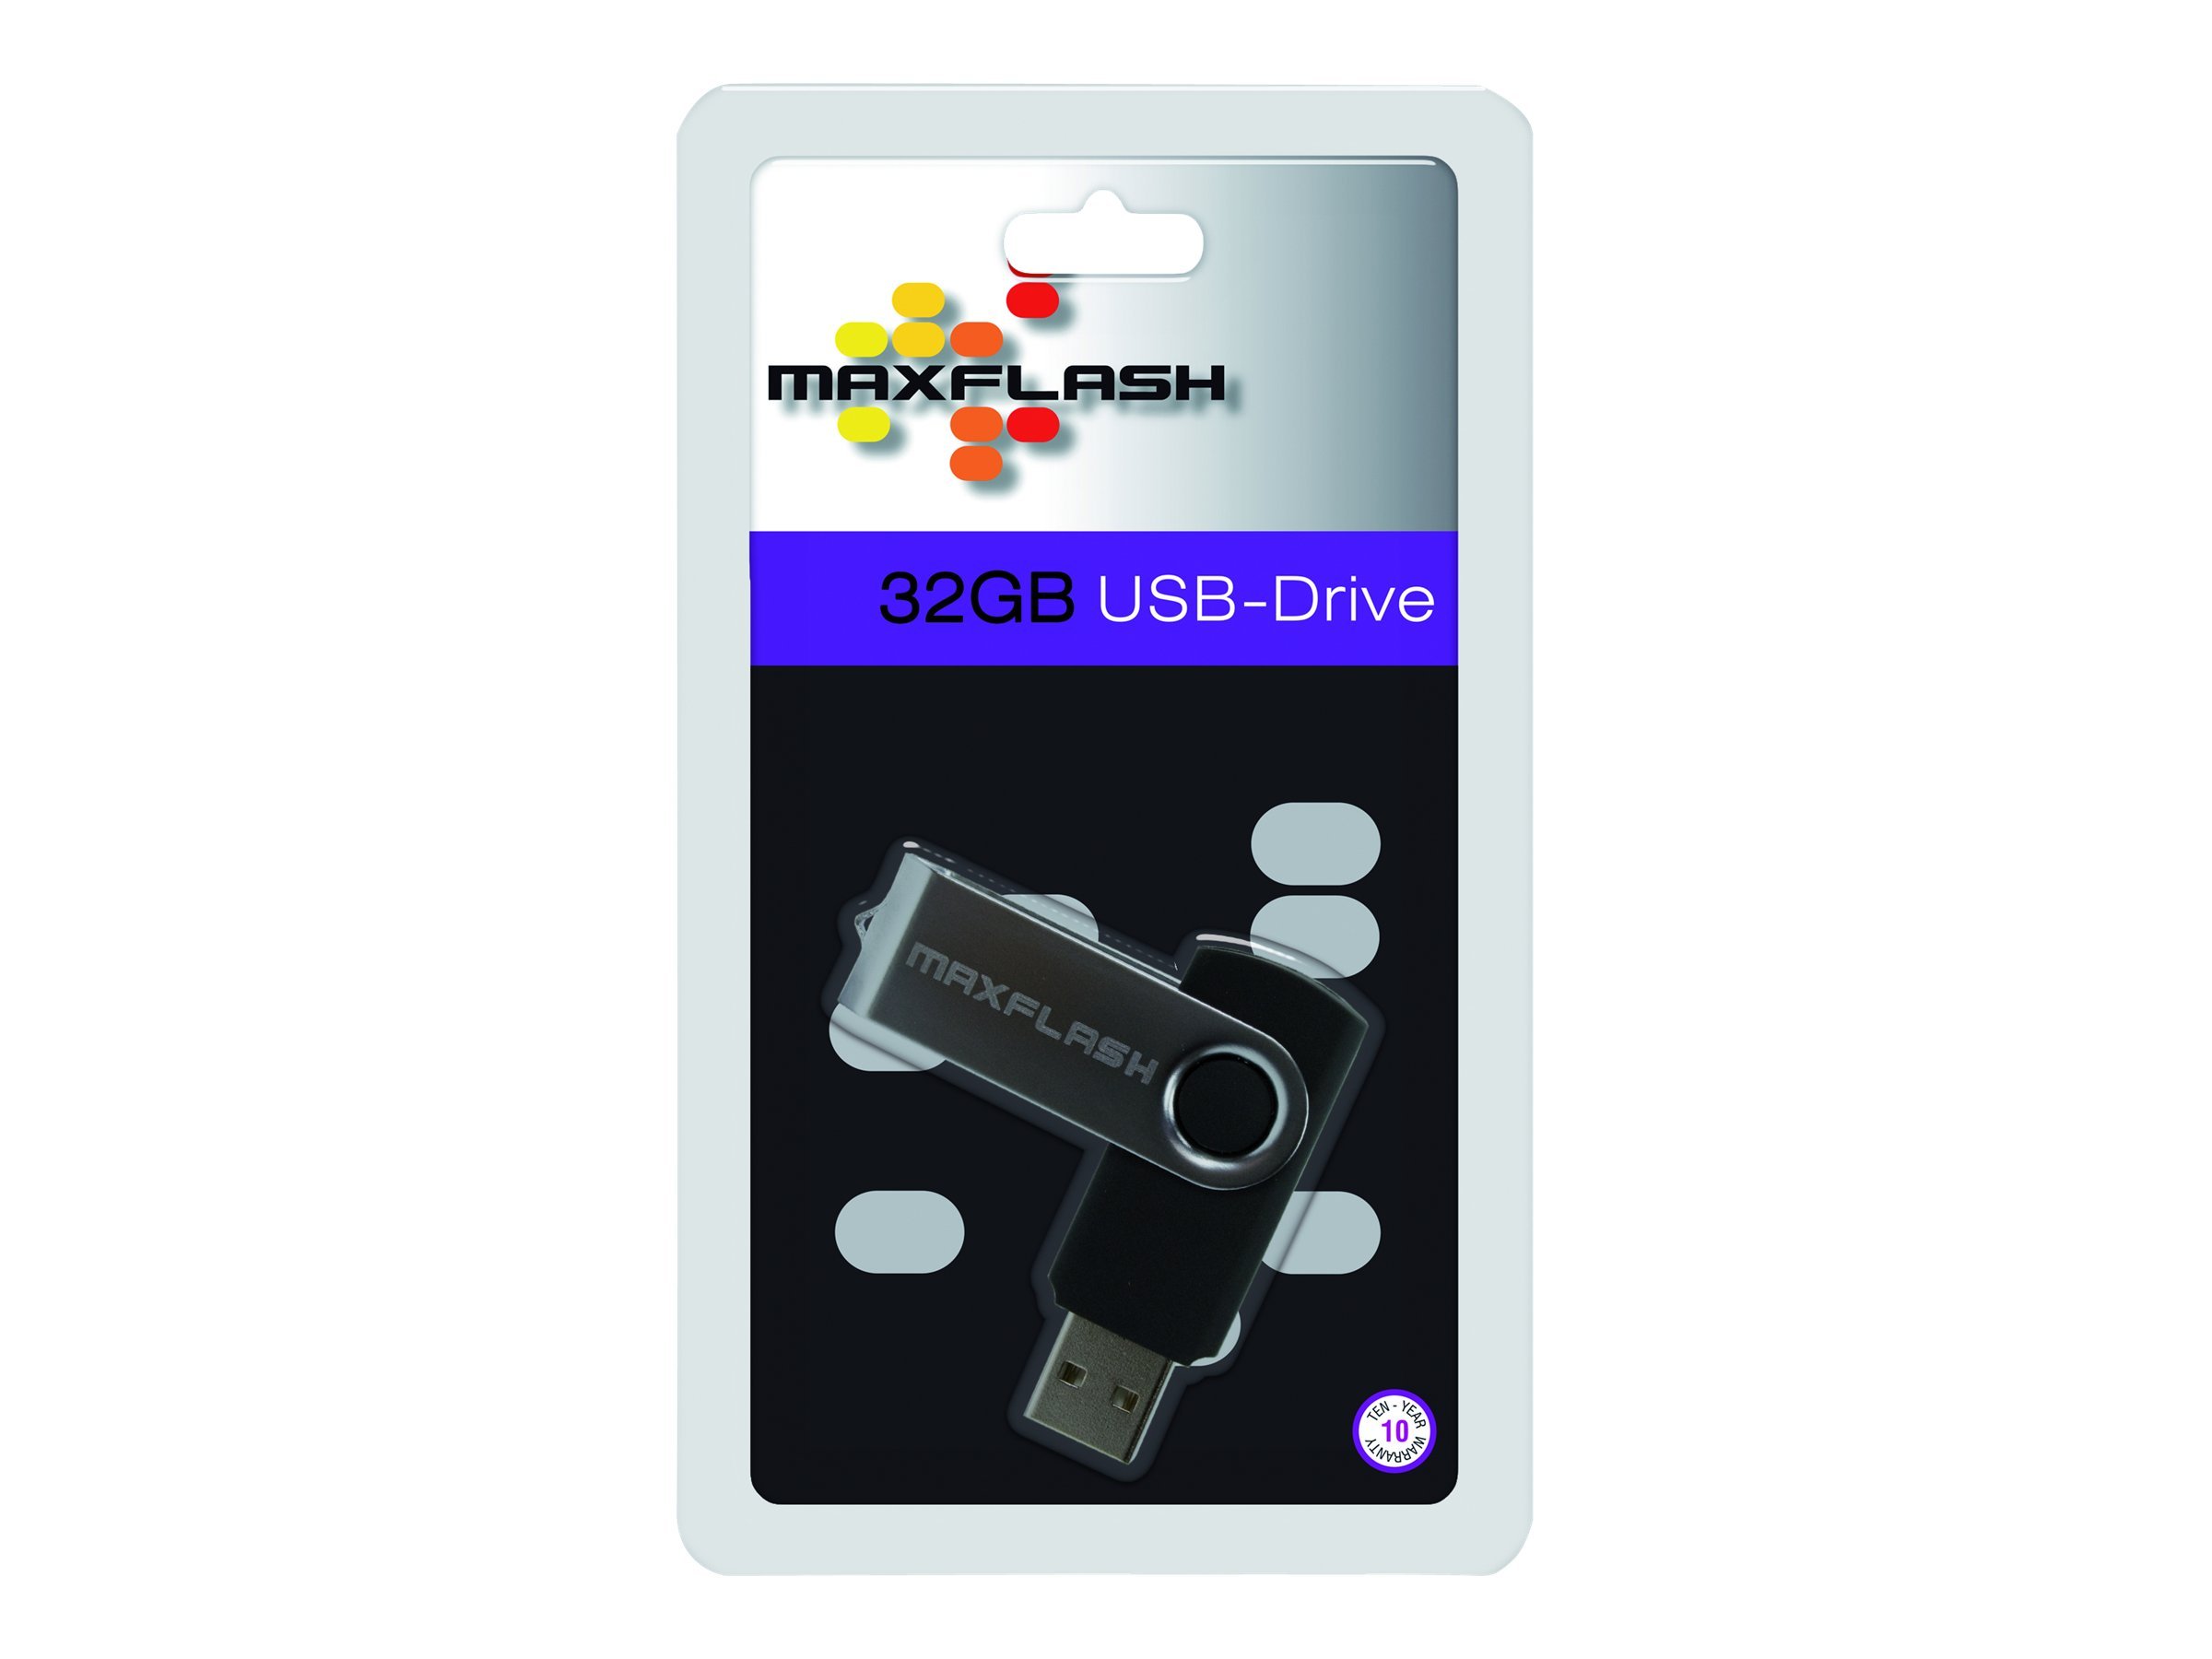 MAXFLASH USB Drive 2.0 - USB-Flash-Laufwerk - 32 GB - USB 2.0